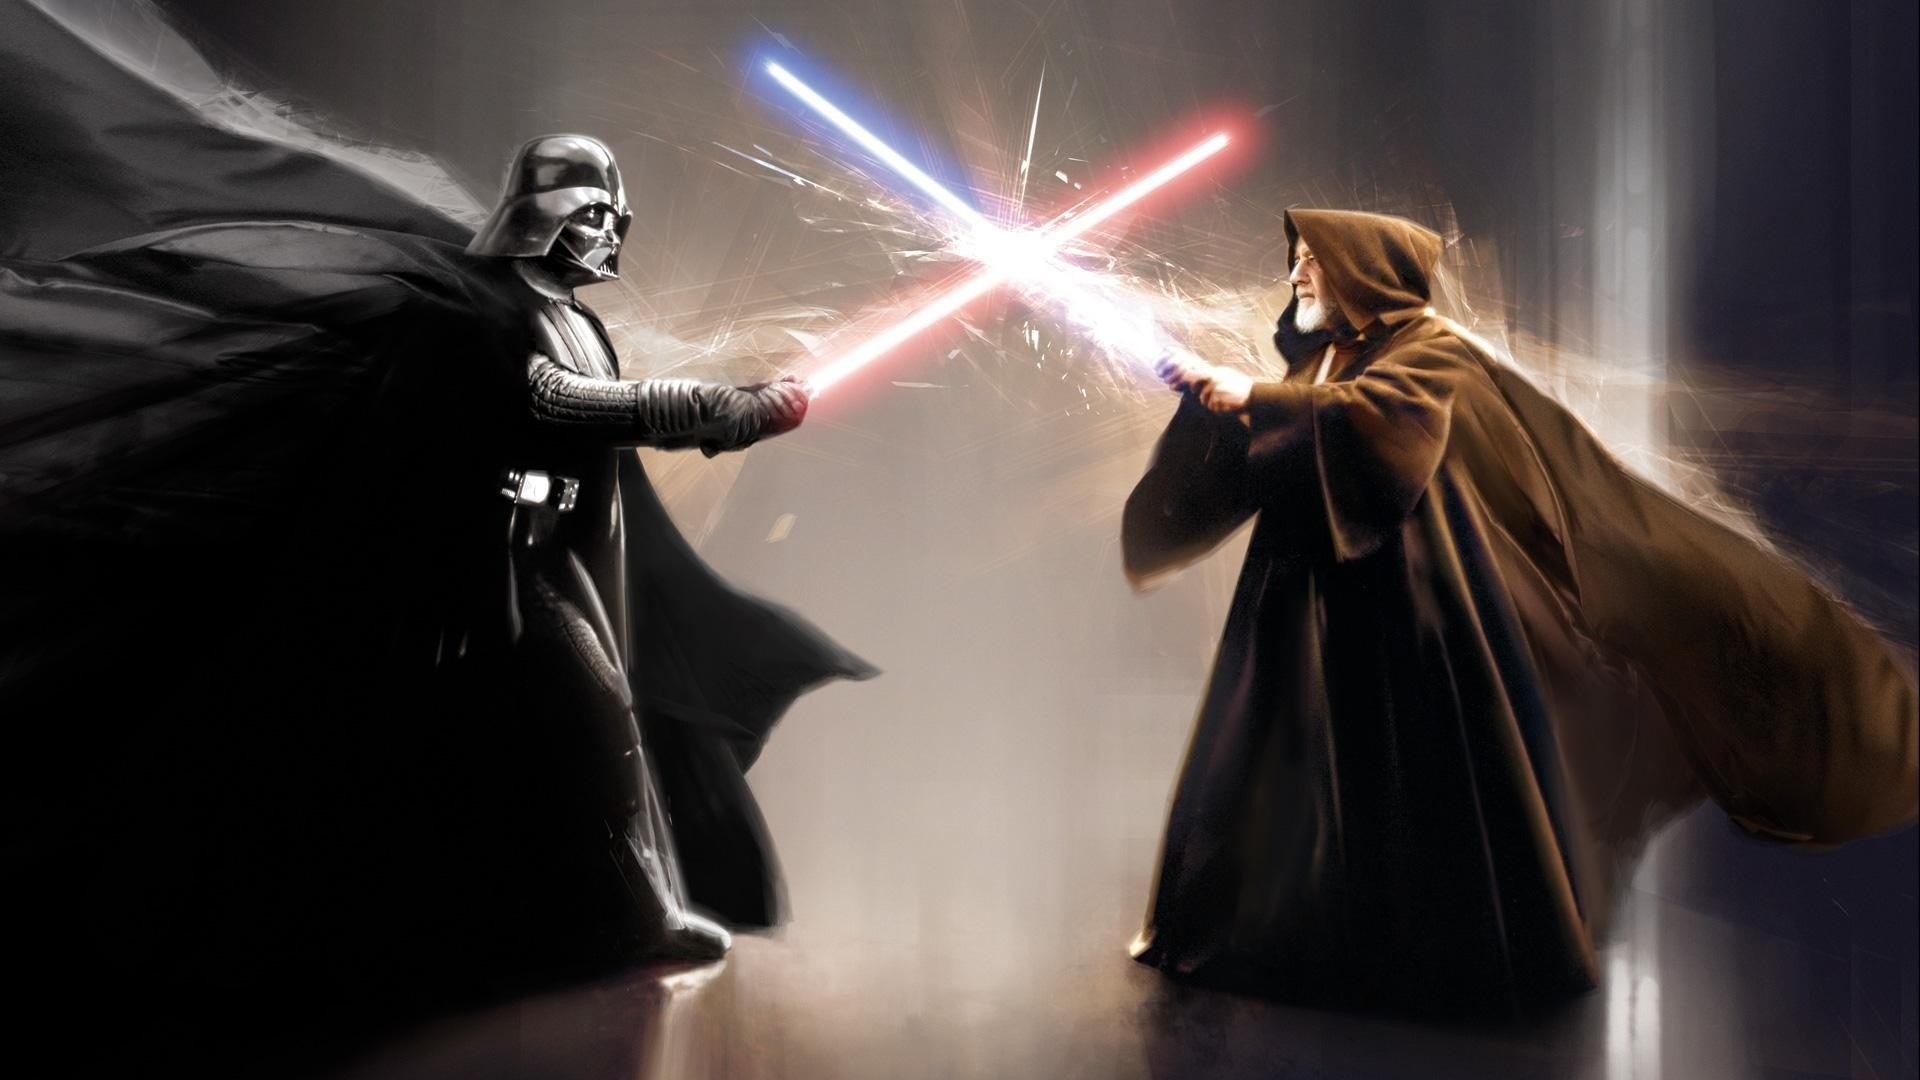 Darth Vader Obi Wan Kenobi movies star wars sci fi weapons lightsaber battle video games